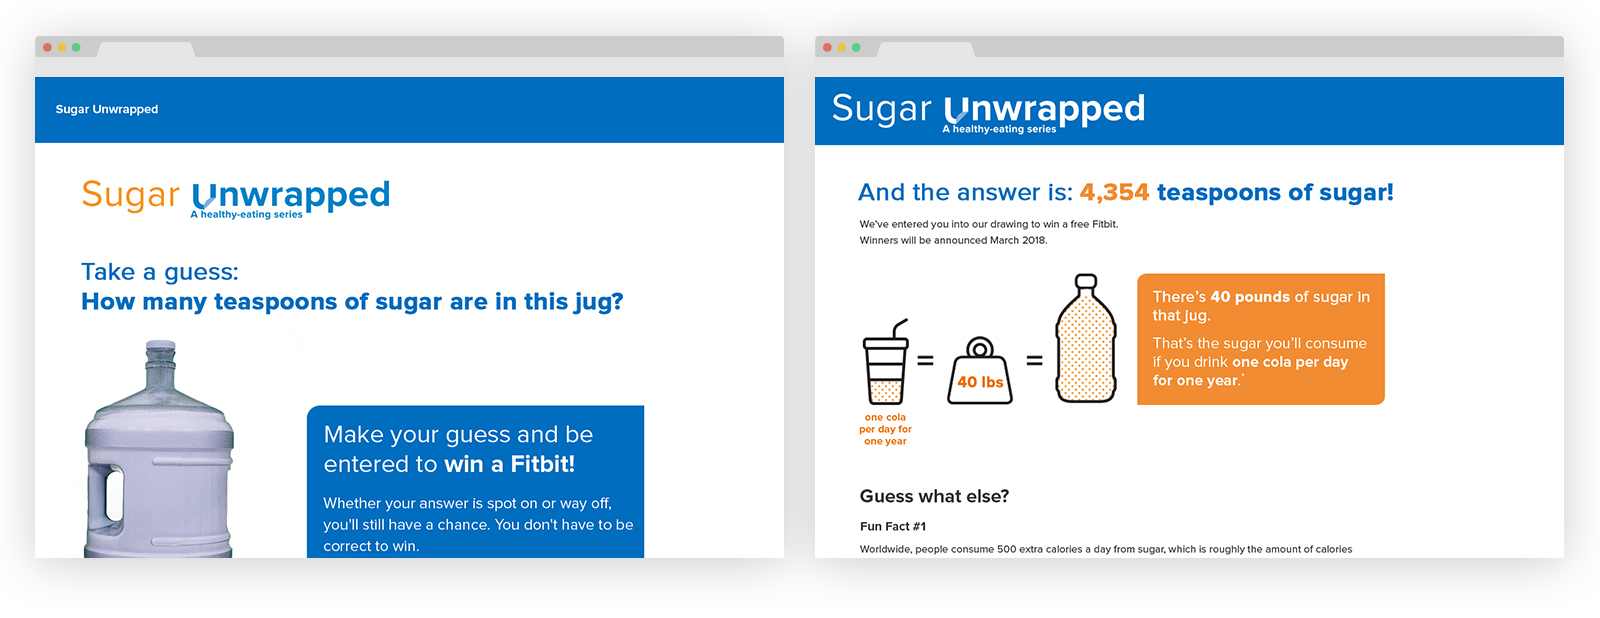 Geisinger Sugar Unwrapped campaign website